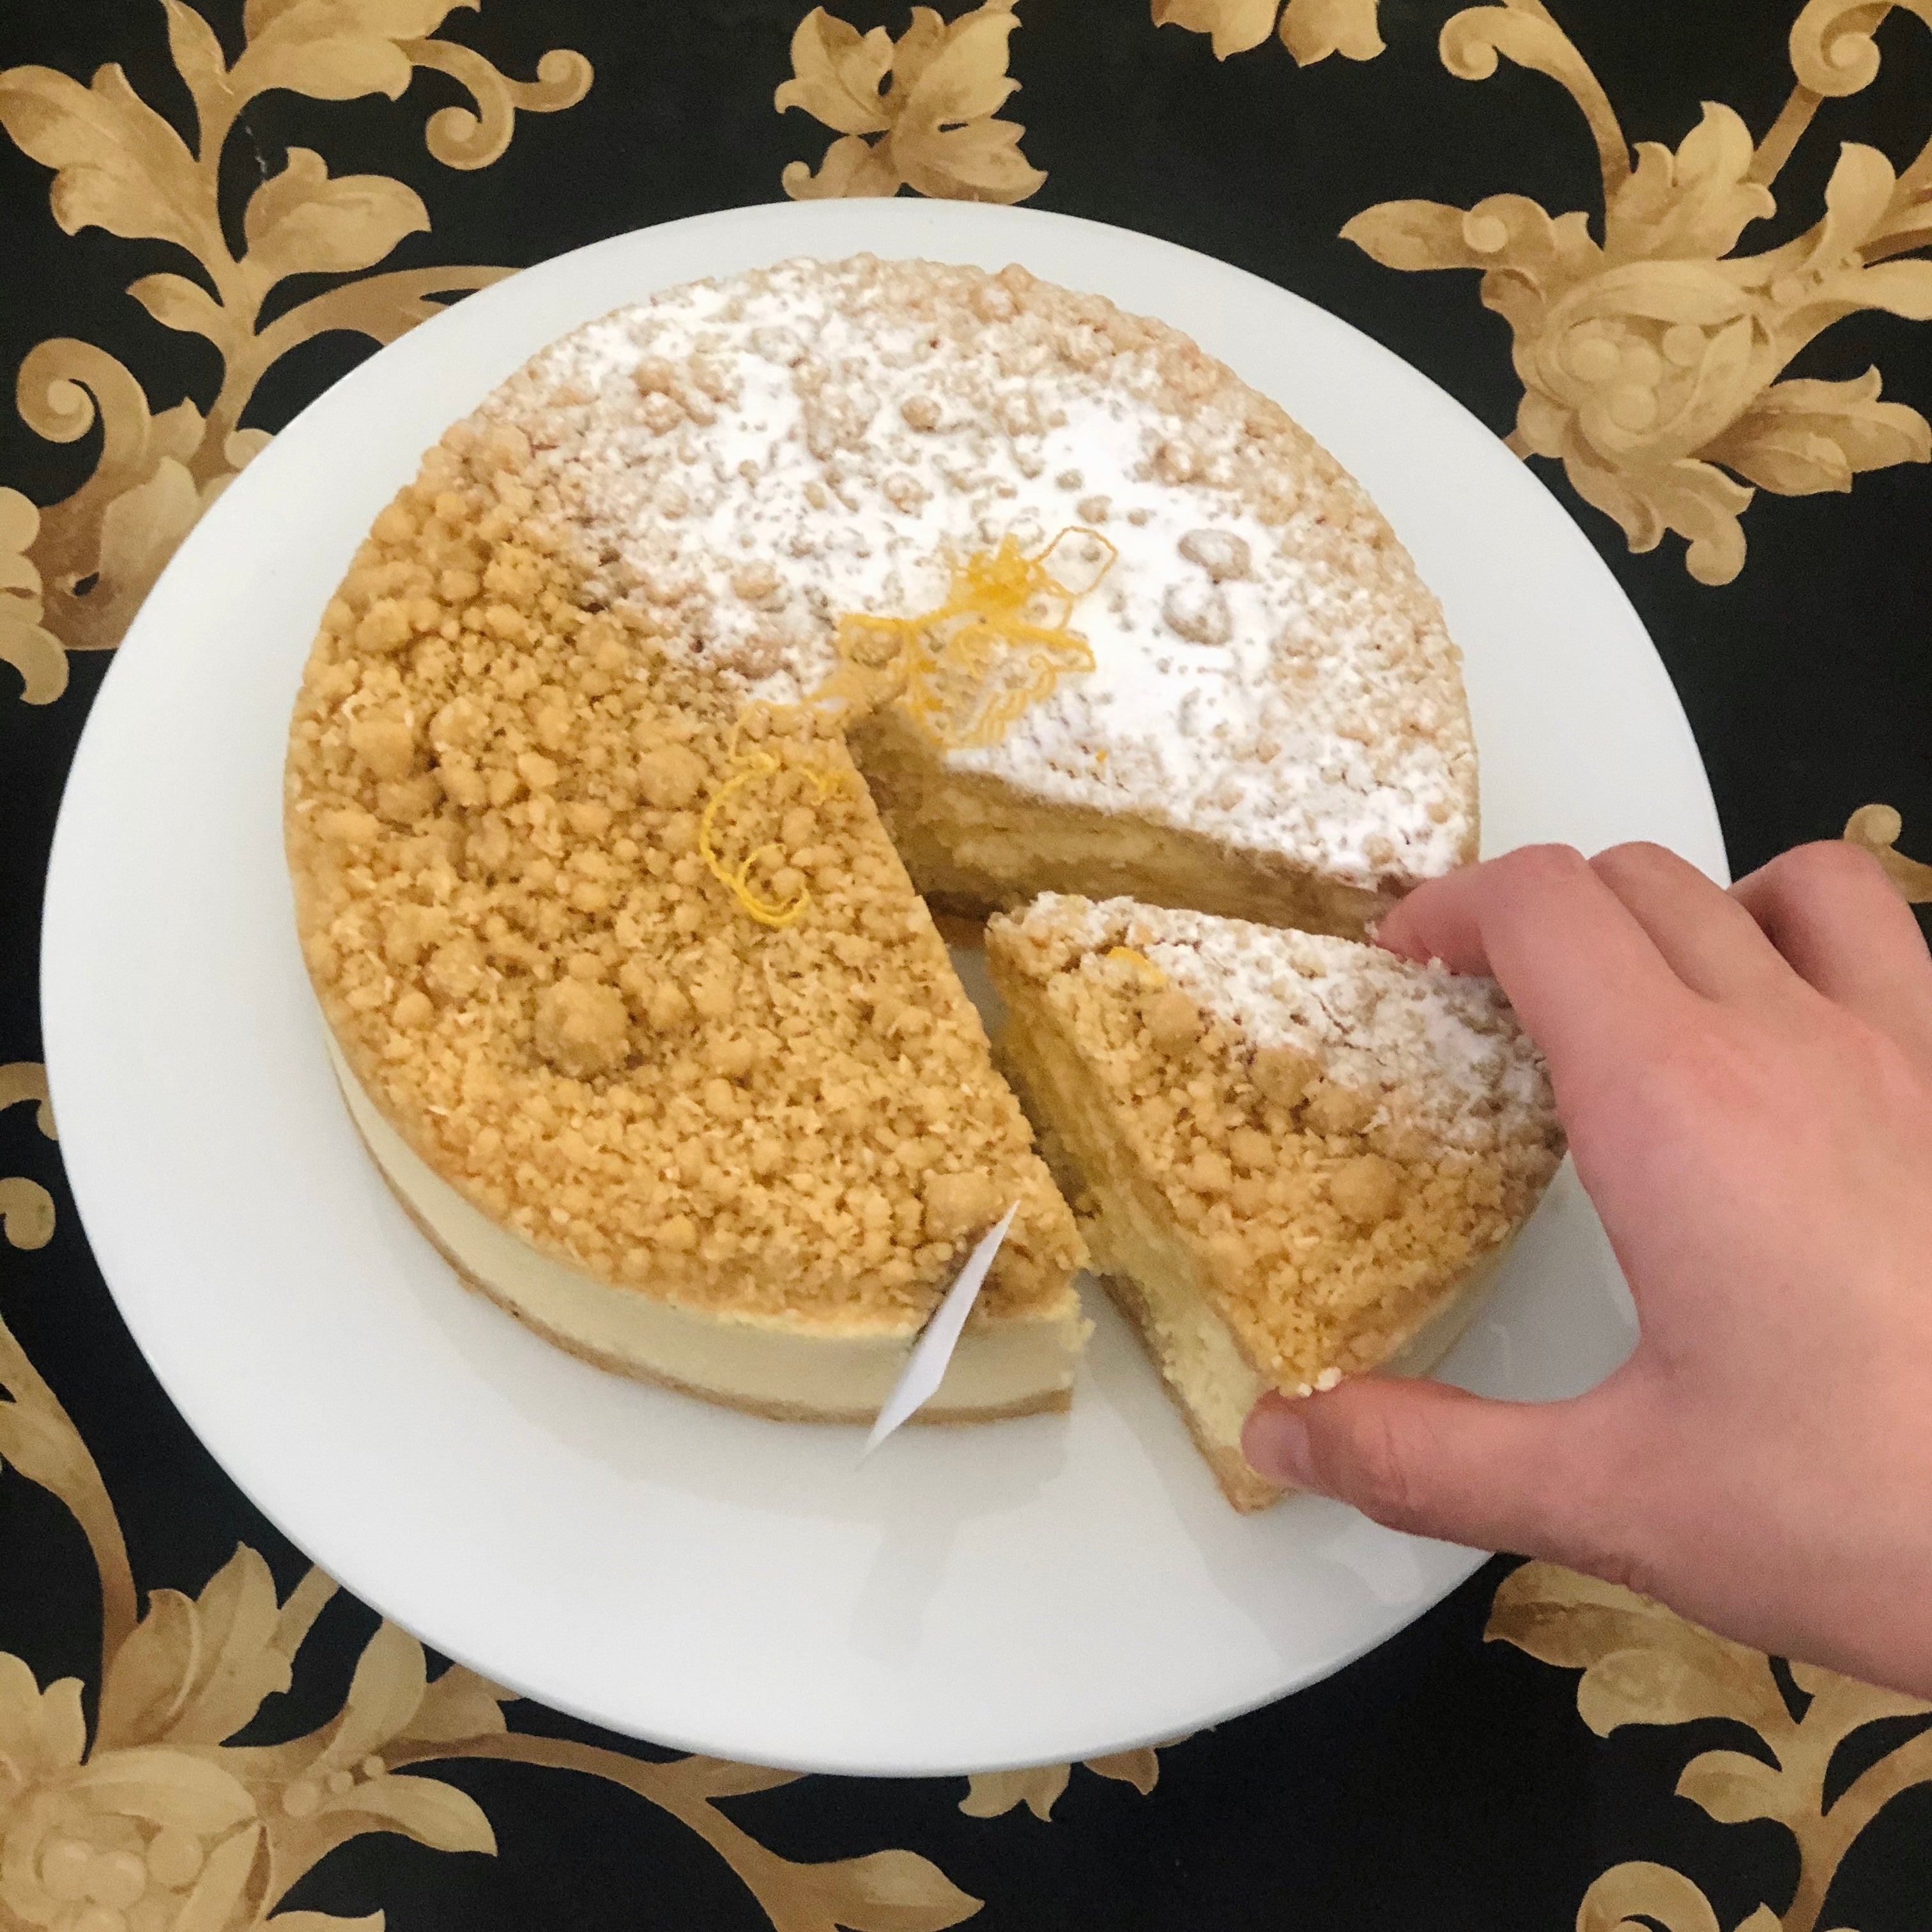 Italian Ricotta Crumble Cheesecake